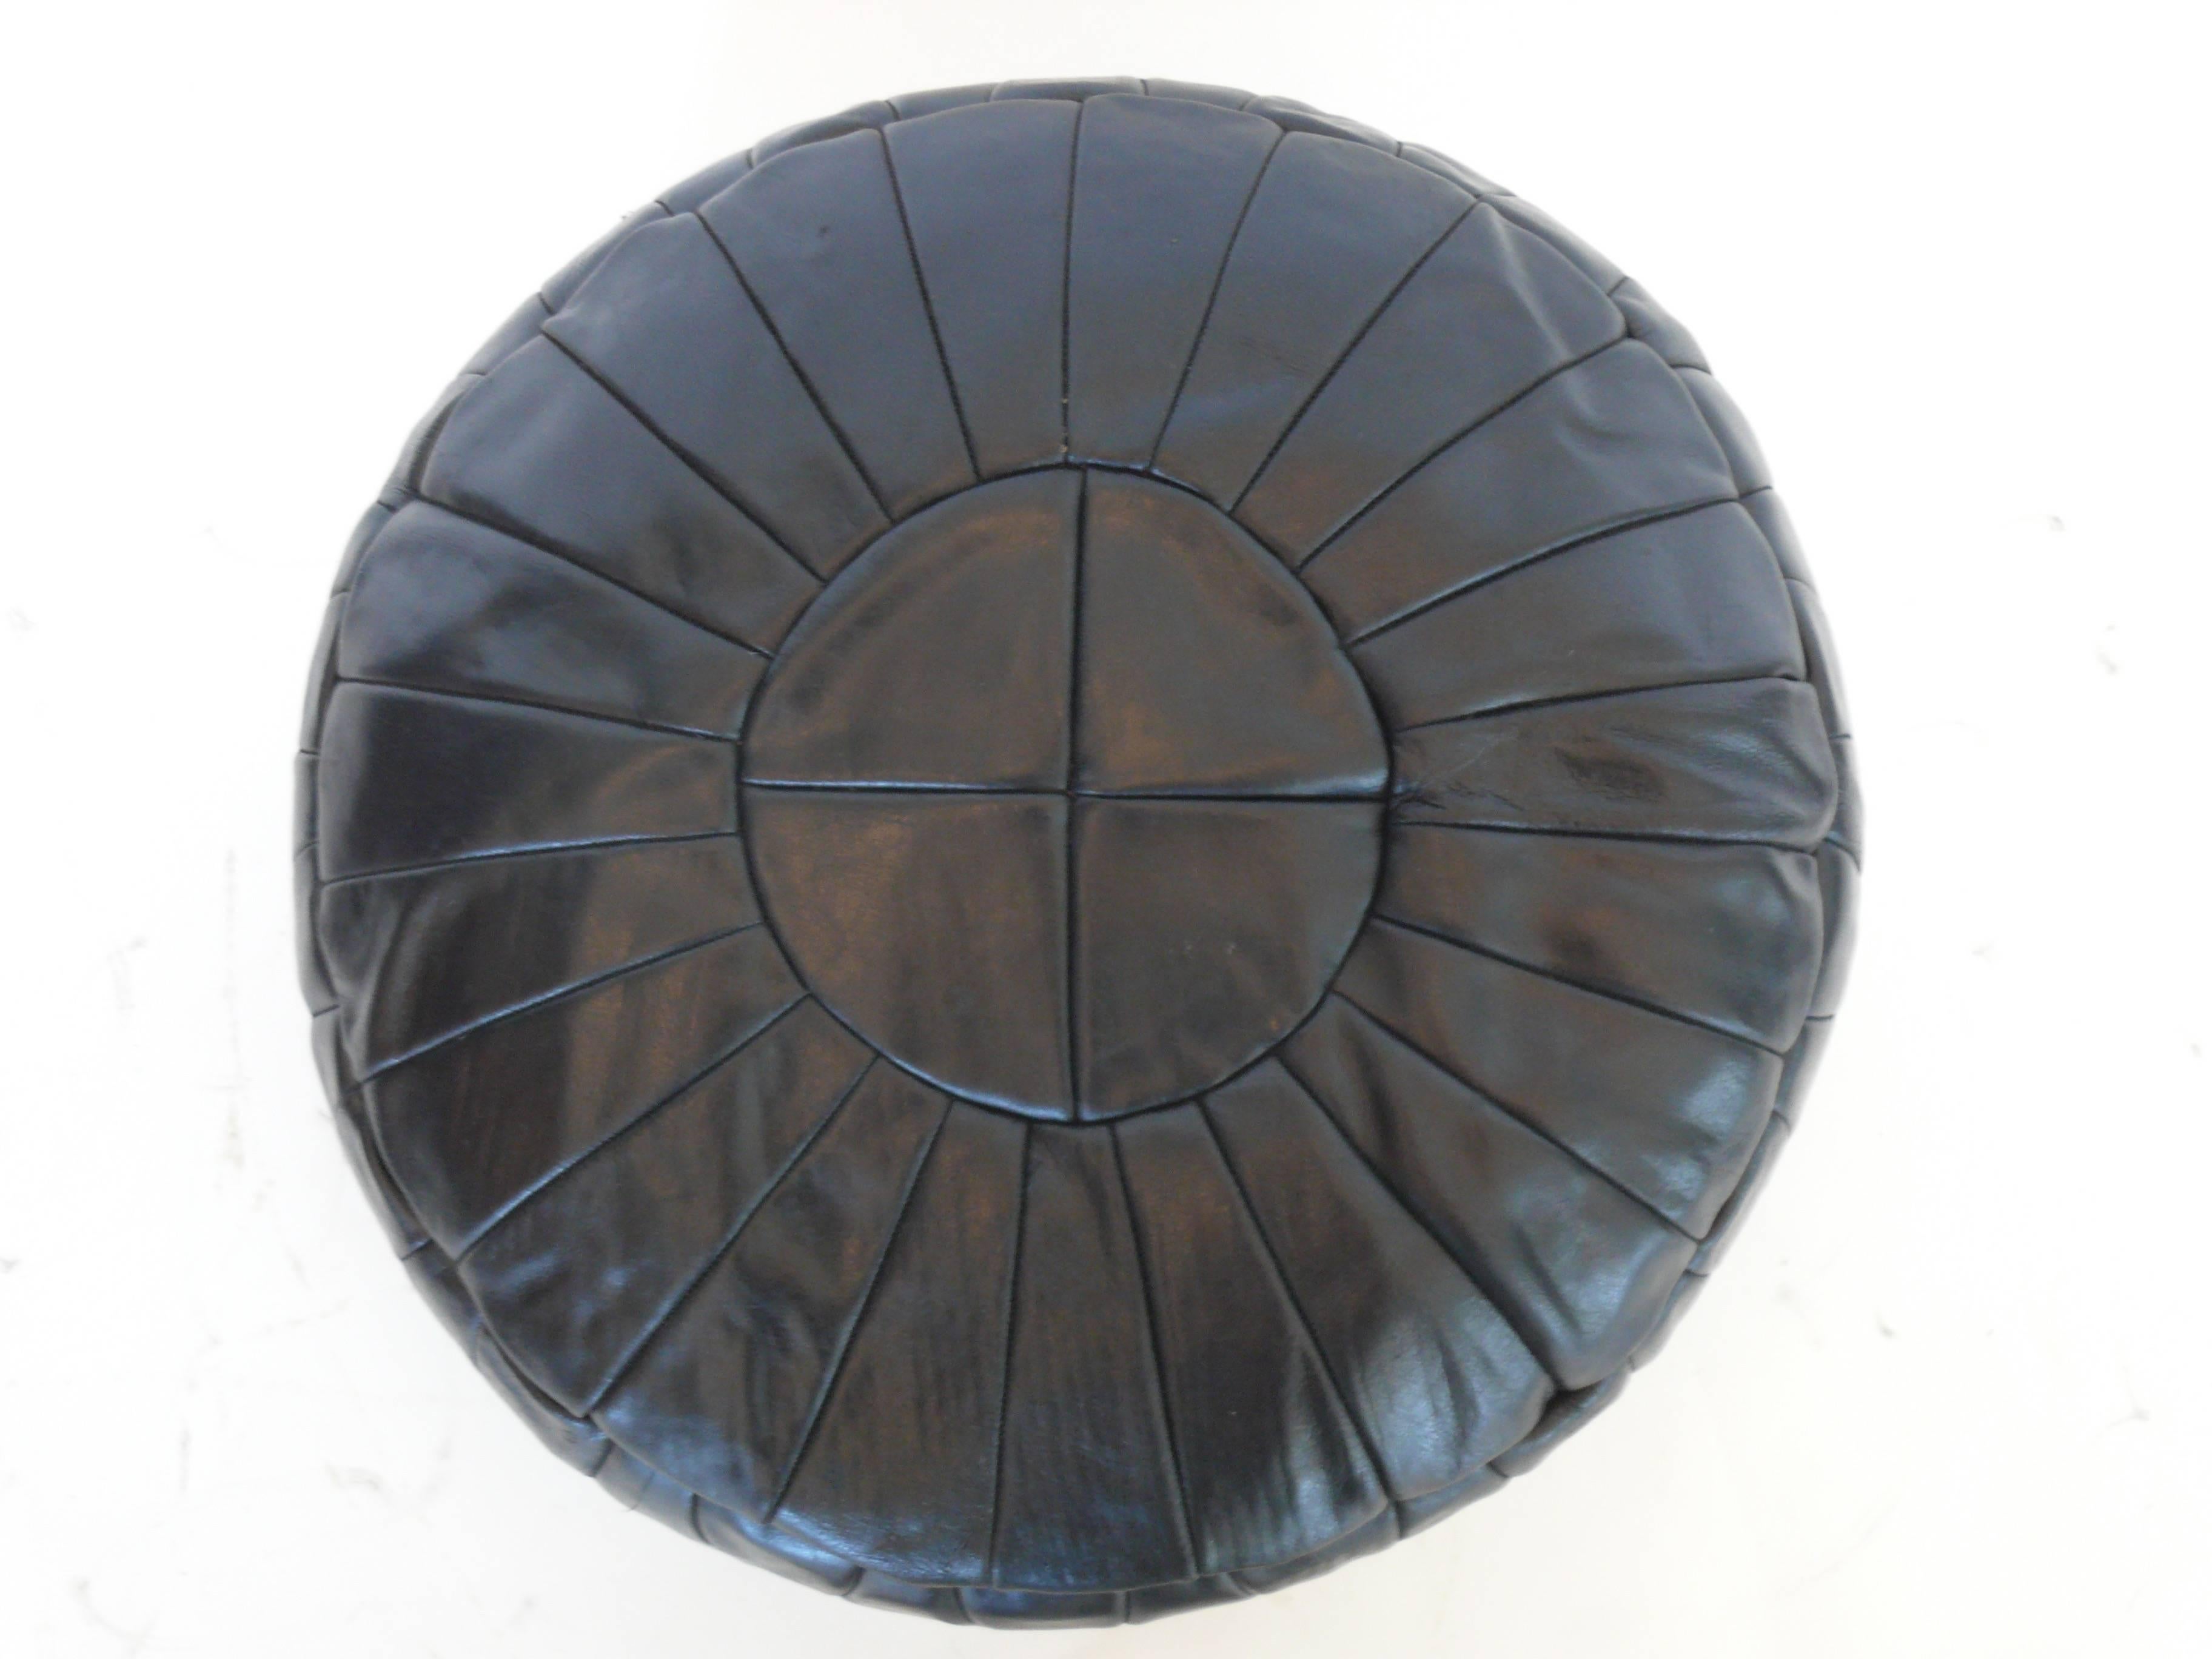 De Sede leather ottoman with signature patchwork leather.  
Great original patina.